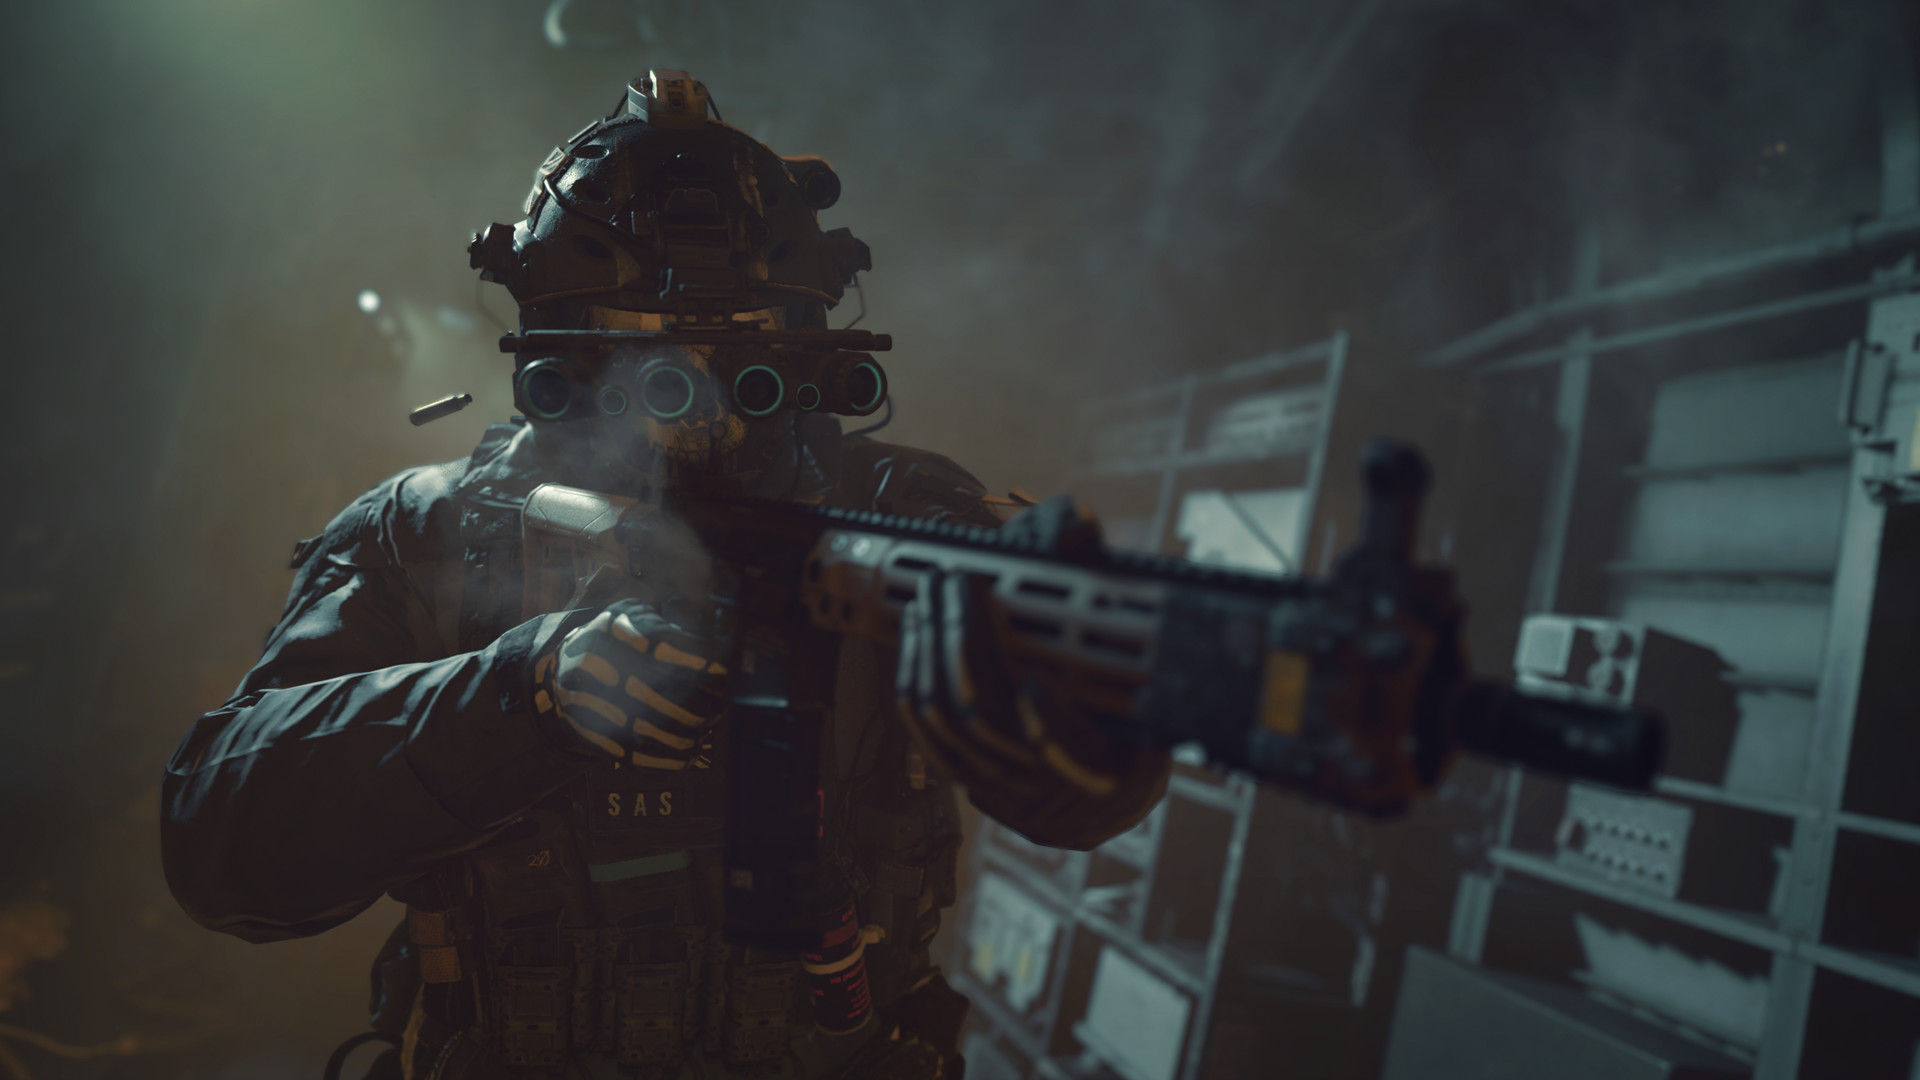 Call of Duty: Advanced Warfare Ranked Play Season Begins